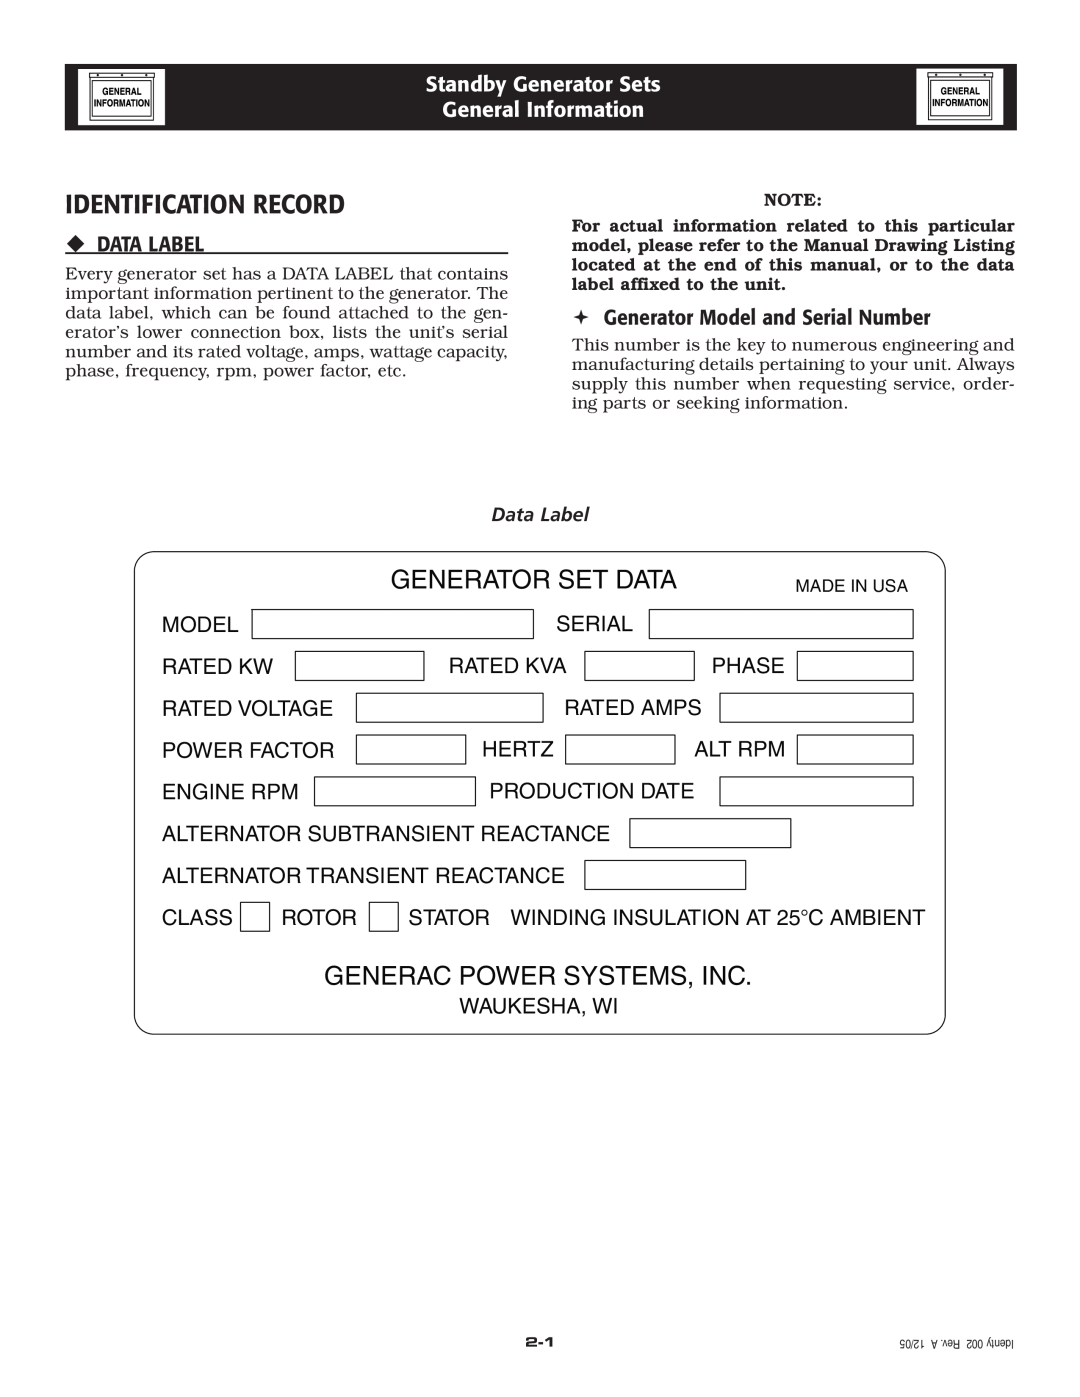 Elite 005212-0 Identification Record, Standby Generator Sets General Information, ‹Data Label, Generator Set Data 